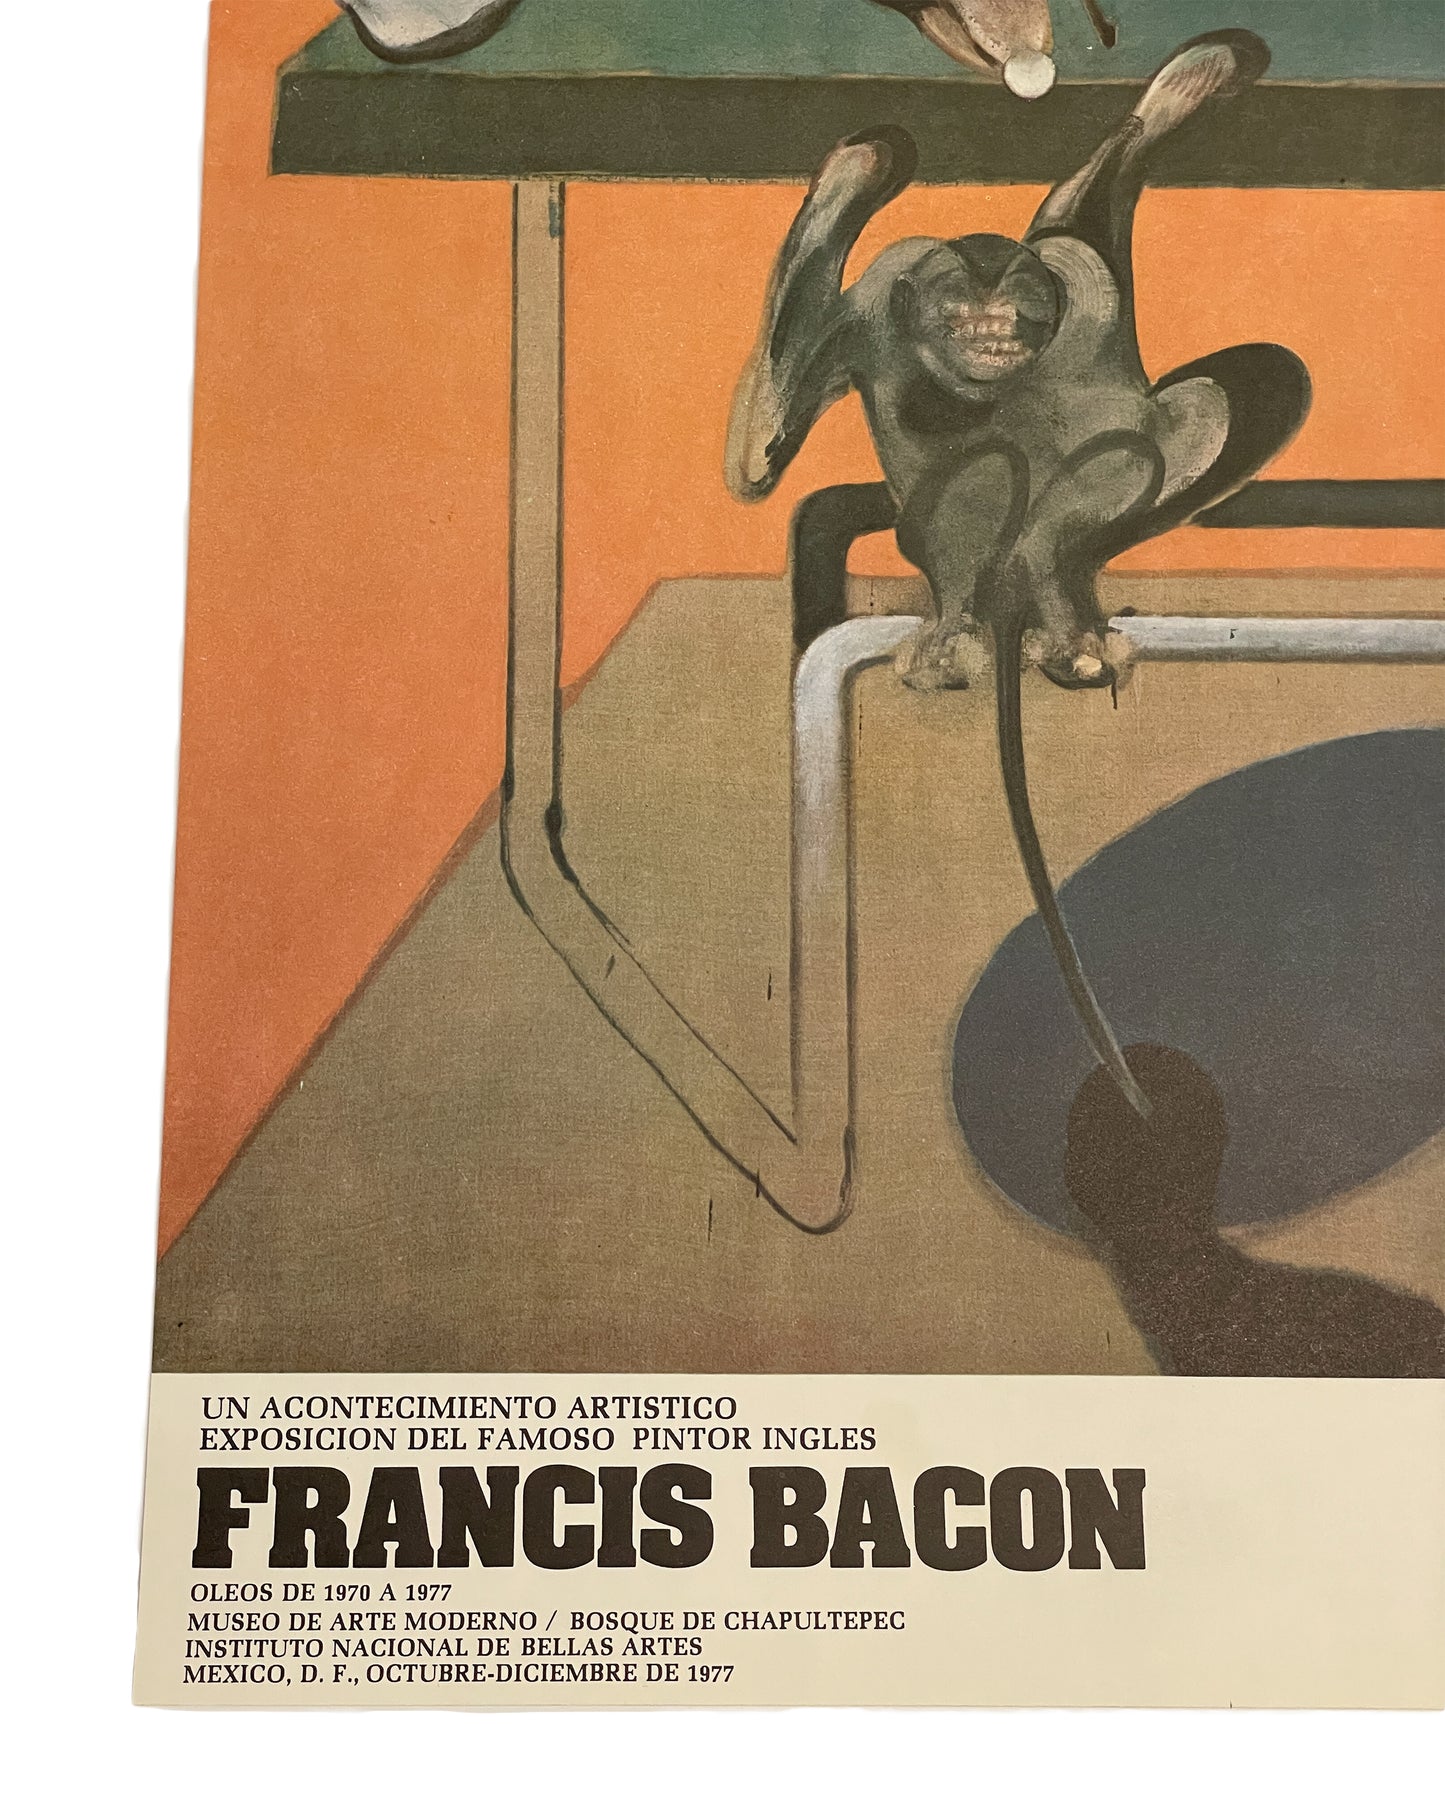 Francis Bacon exhibition poster, 1977